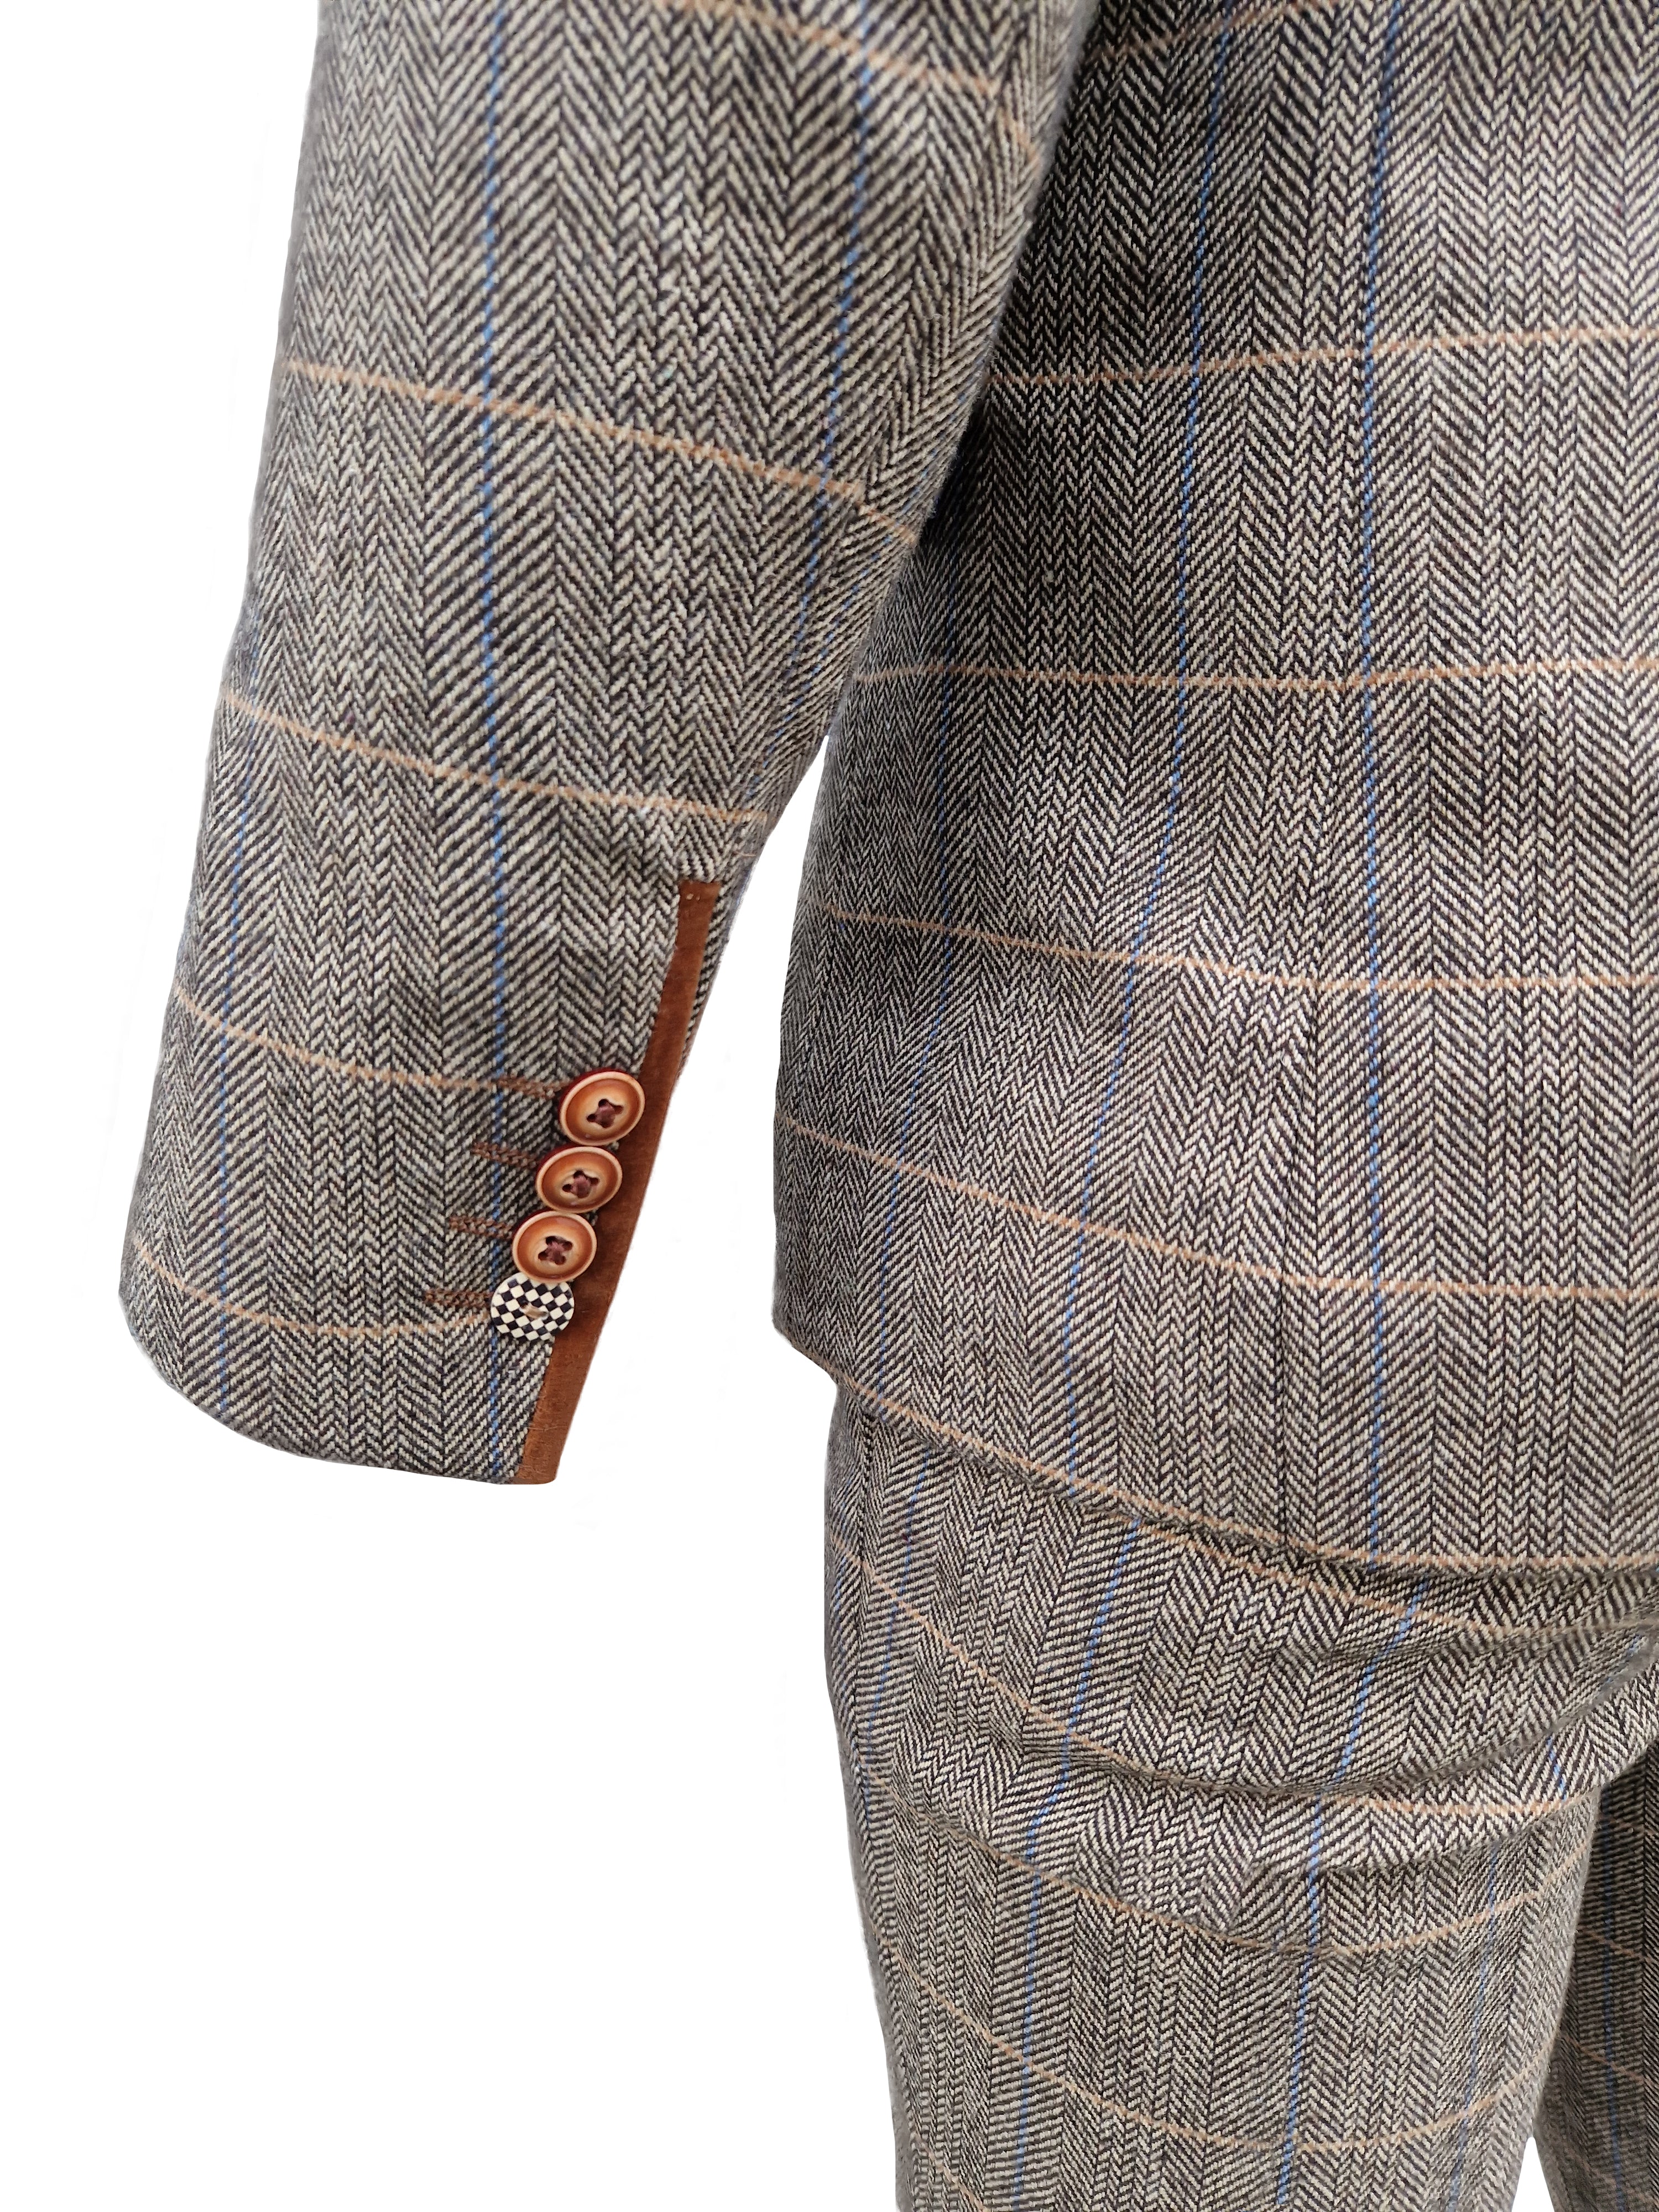 Mix and match - 3-piece Men's Suit Herringbone Brown/Cream